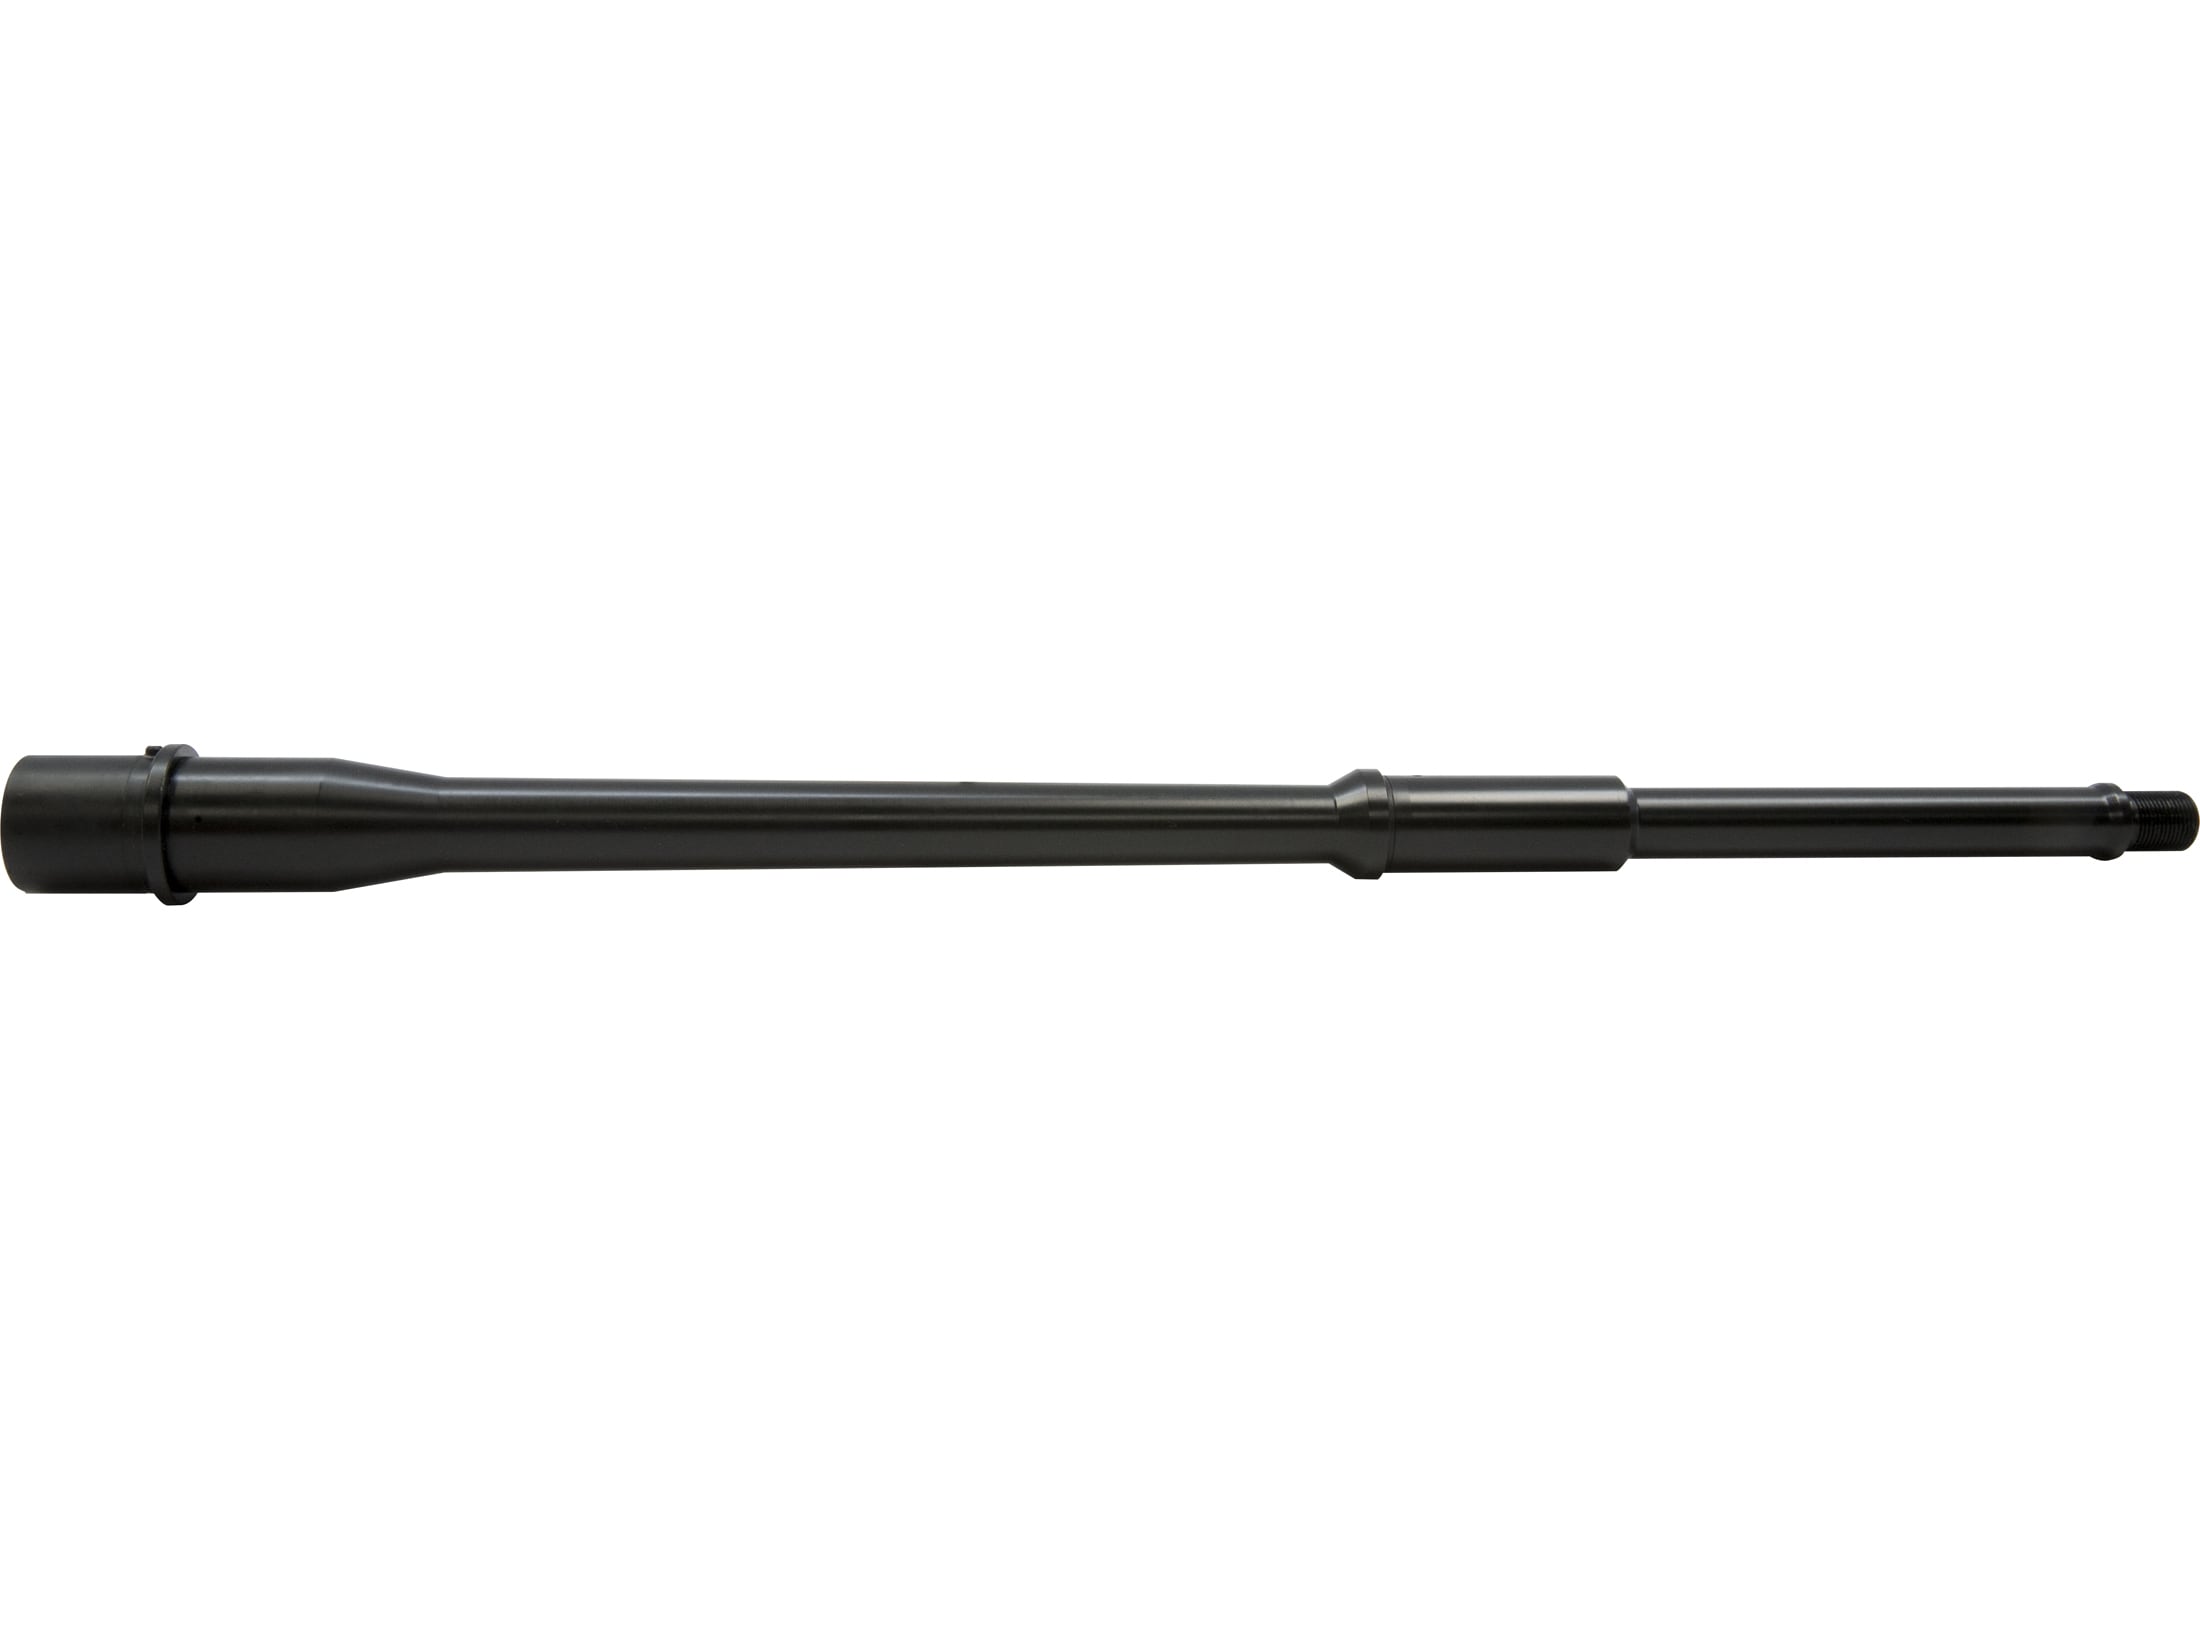 AR-STONER Barrel AR-15 223 Remington (Wylde) Lightweight Contour 1 8